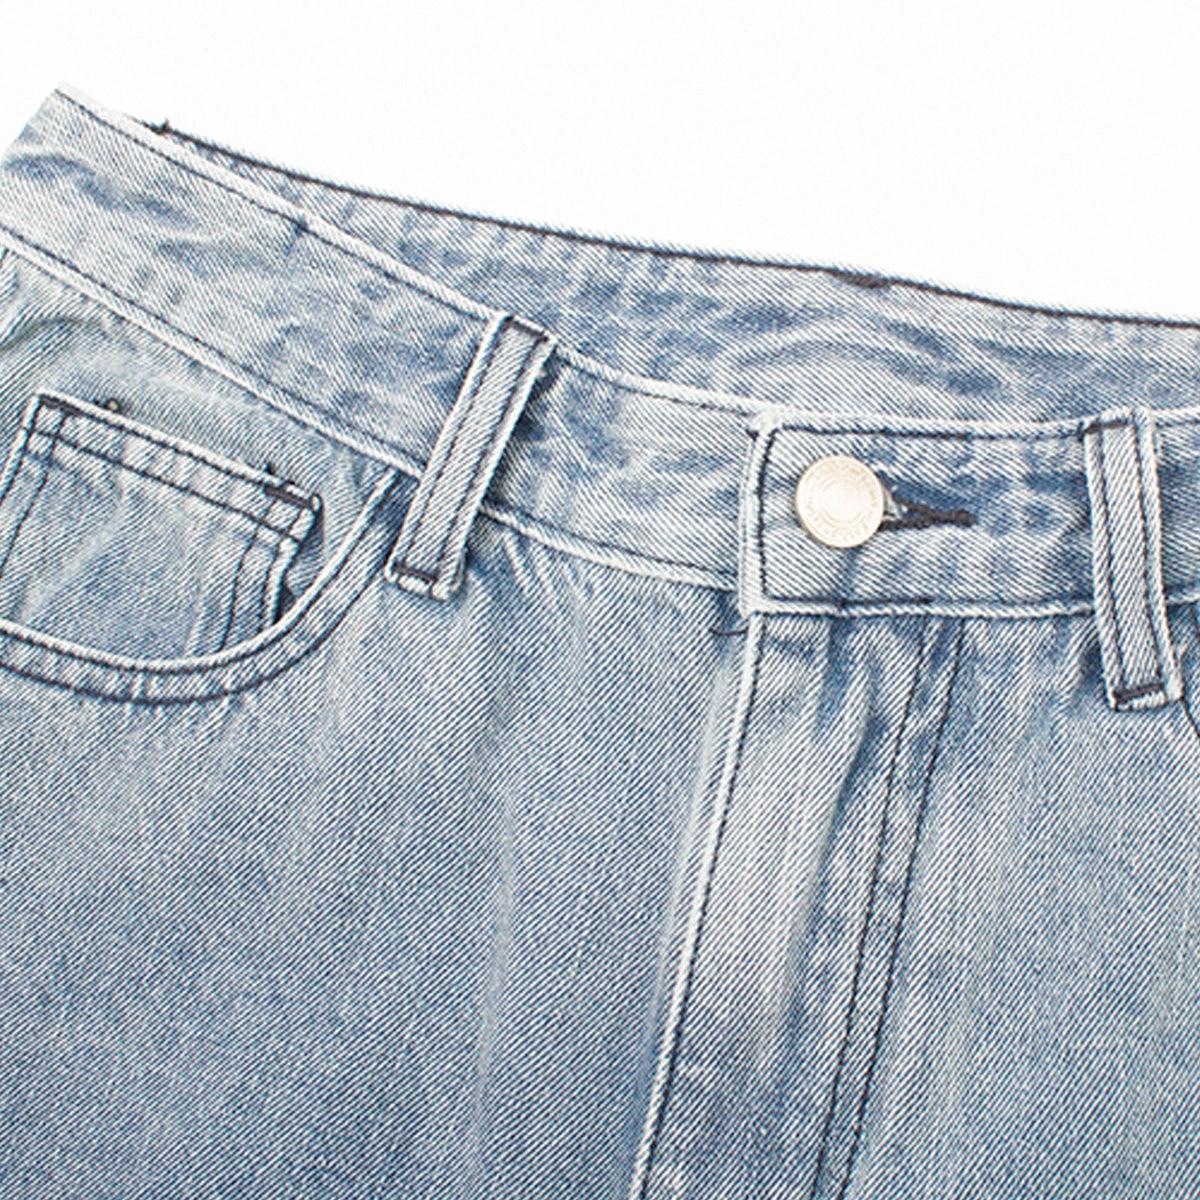 Washed Blue High Waist Denim Shorts - Aesthetic Clothes Shop